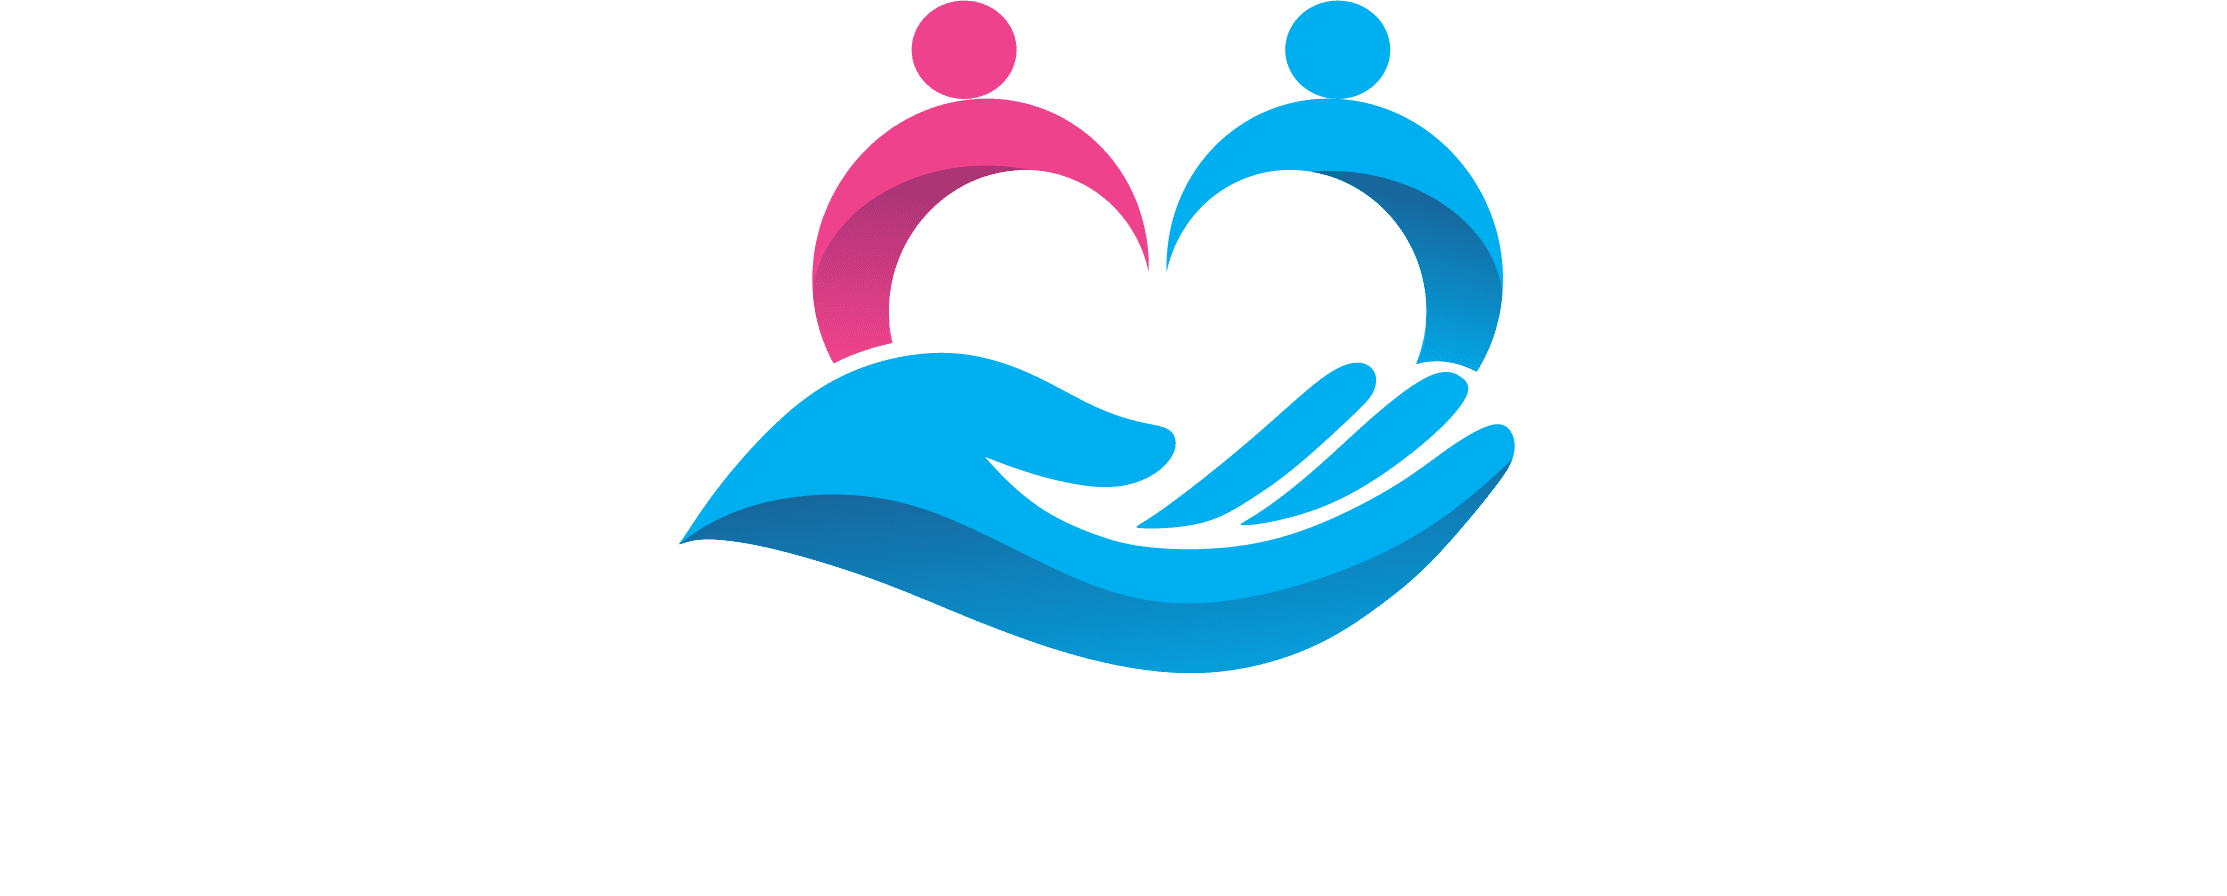 cardiac-logo